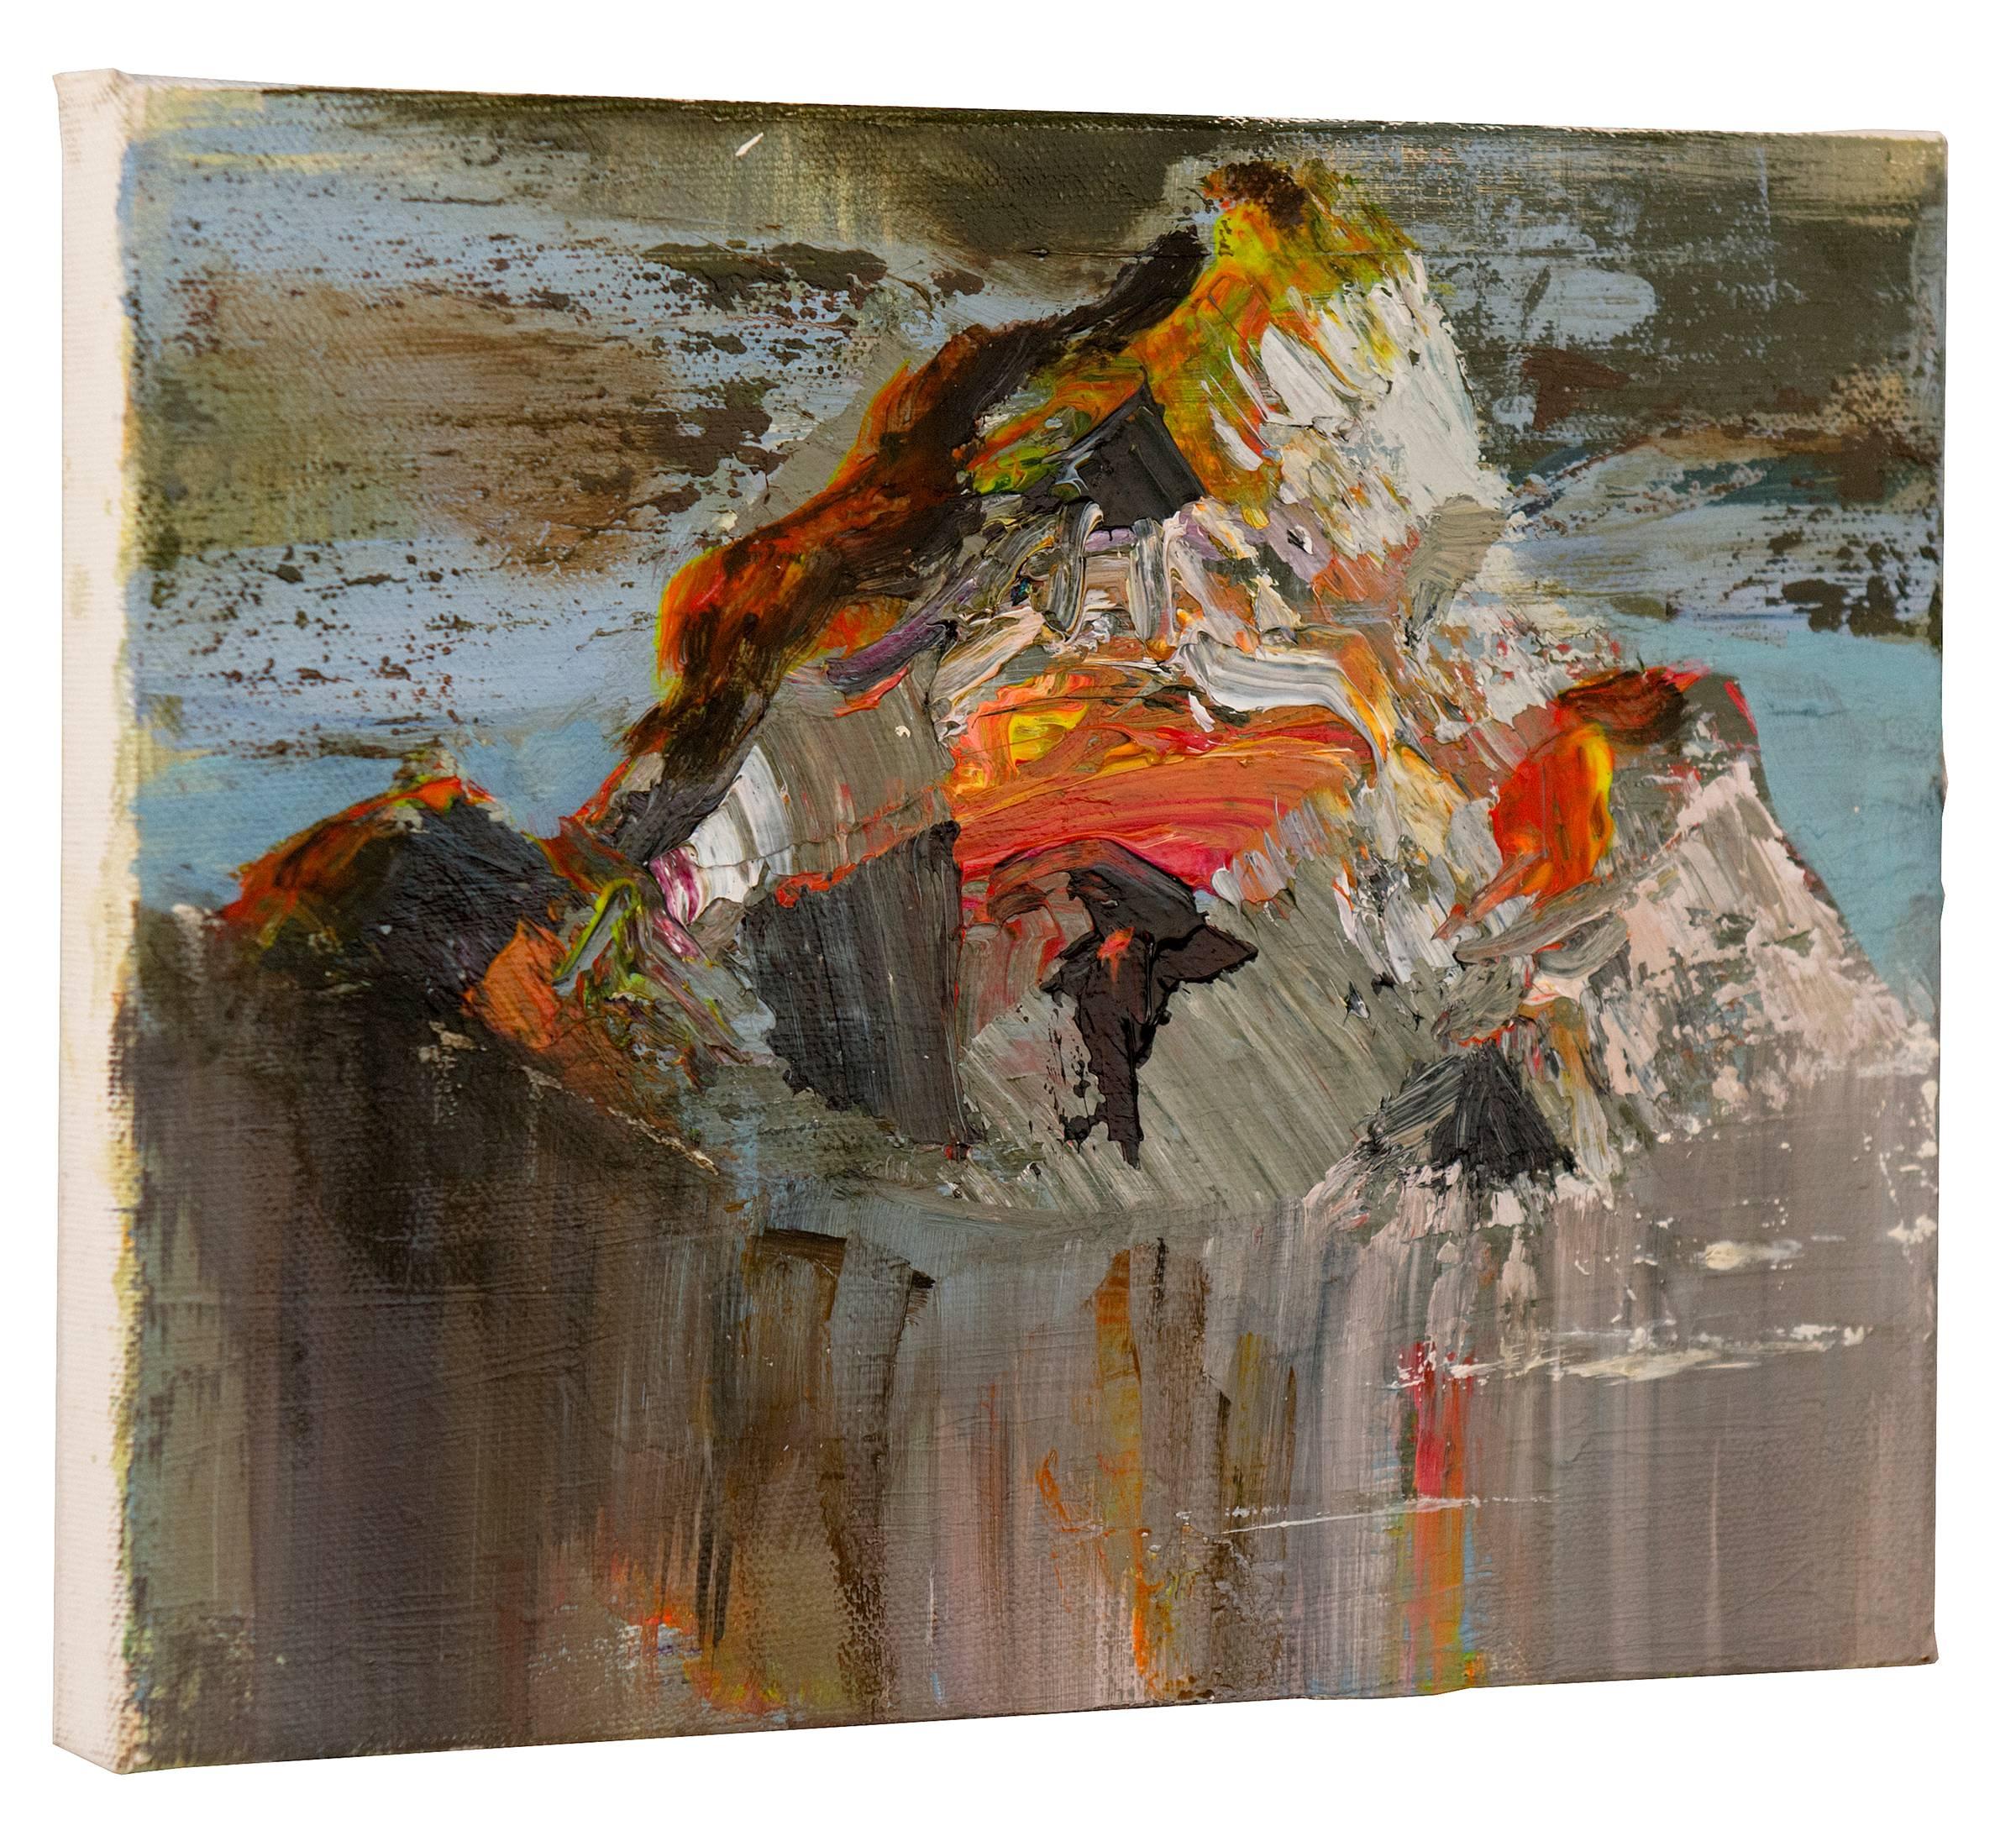 Melting Mountain - Painting by Judith Simonian